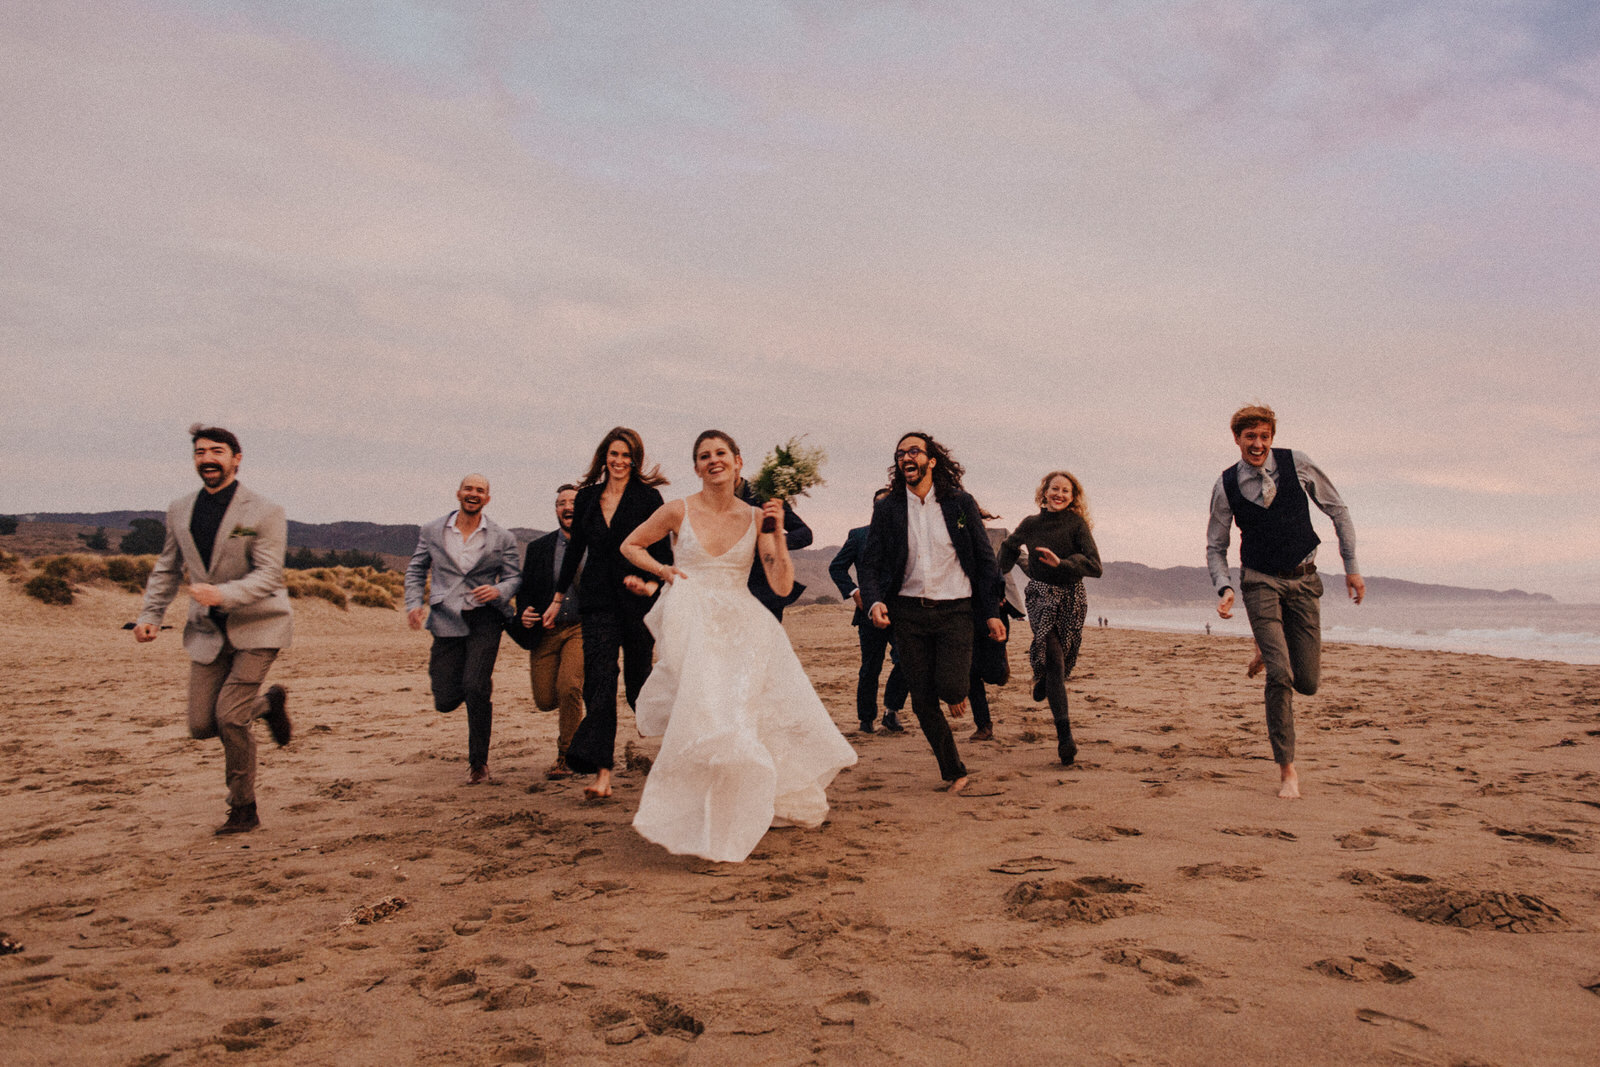 Wedding party running on beach